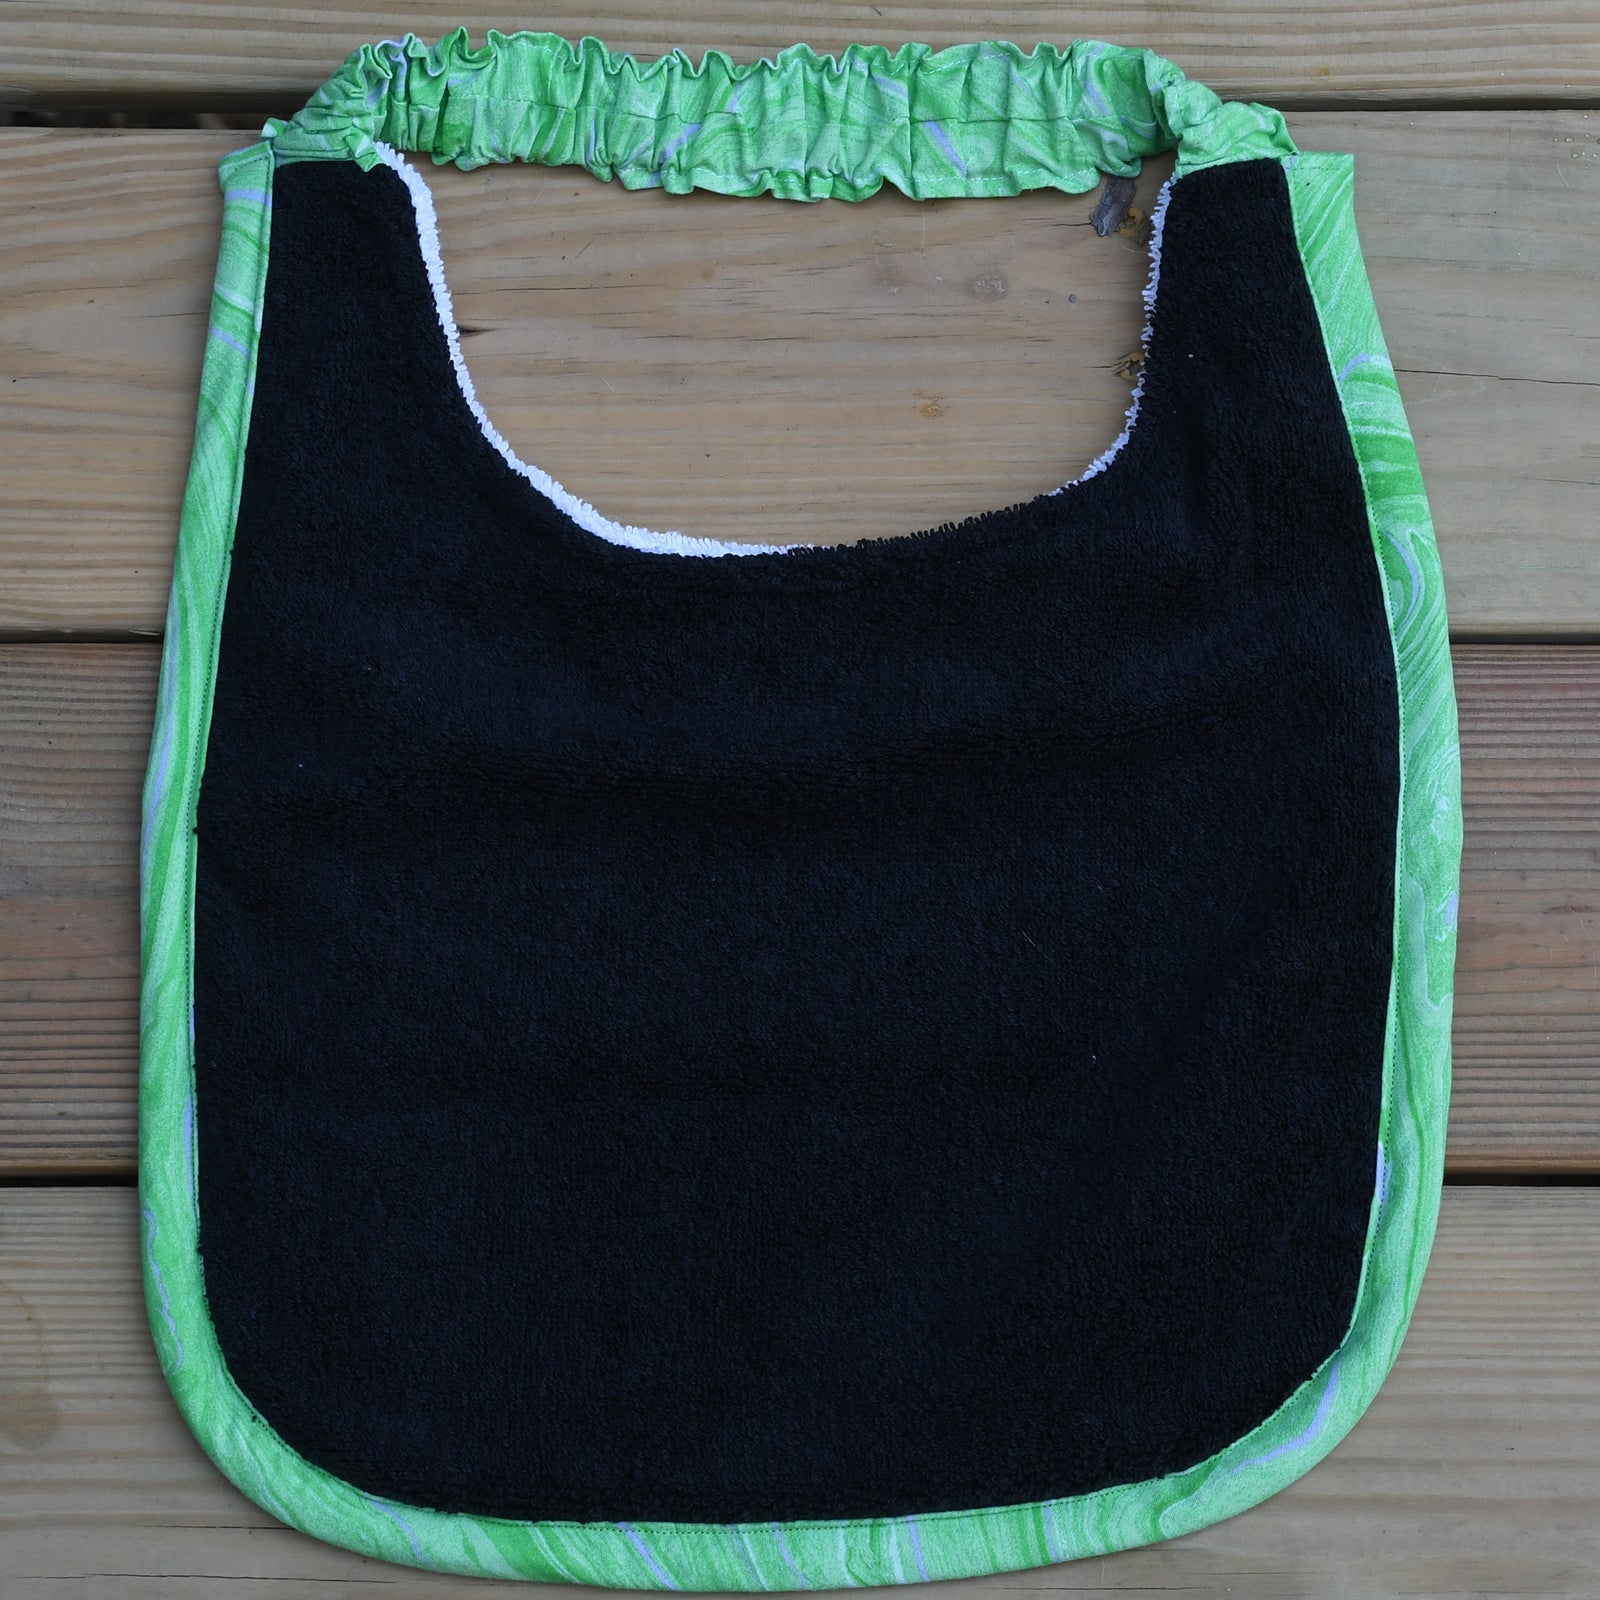 Plain Drool Bib - no embroidery (black front white back)